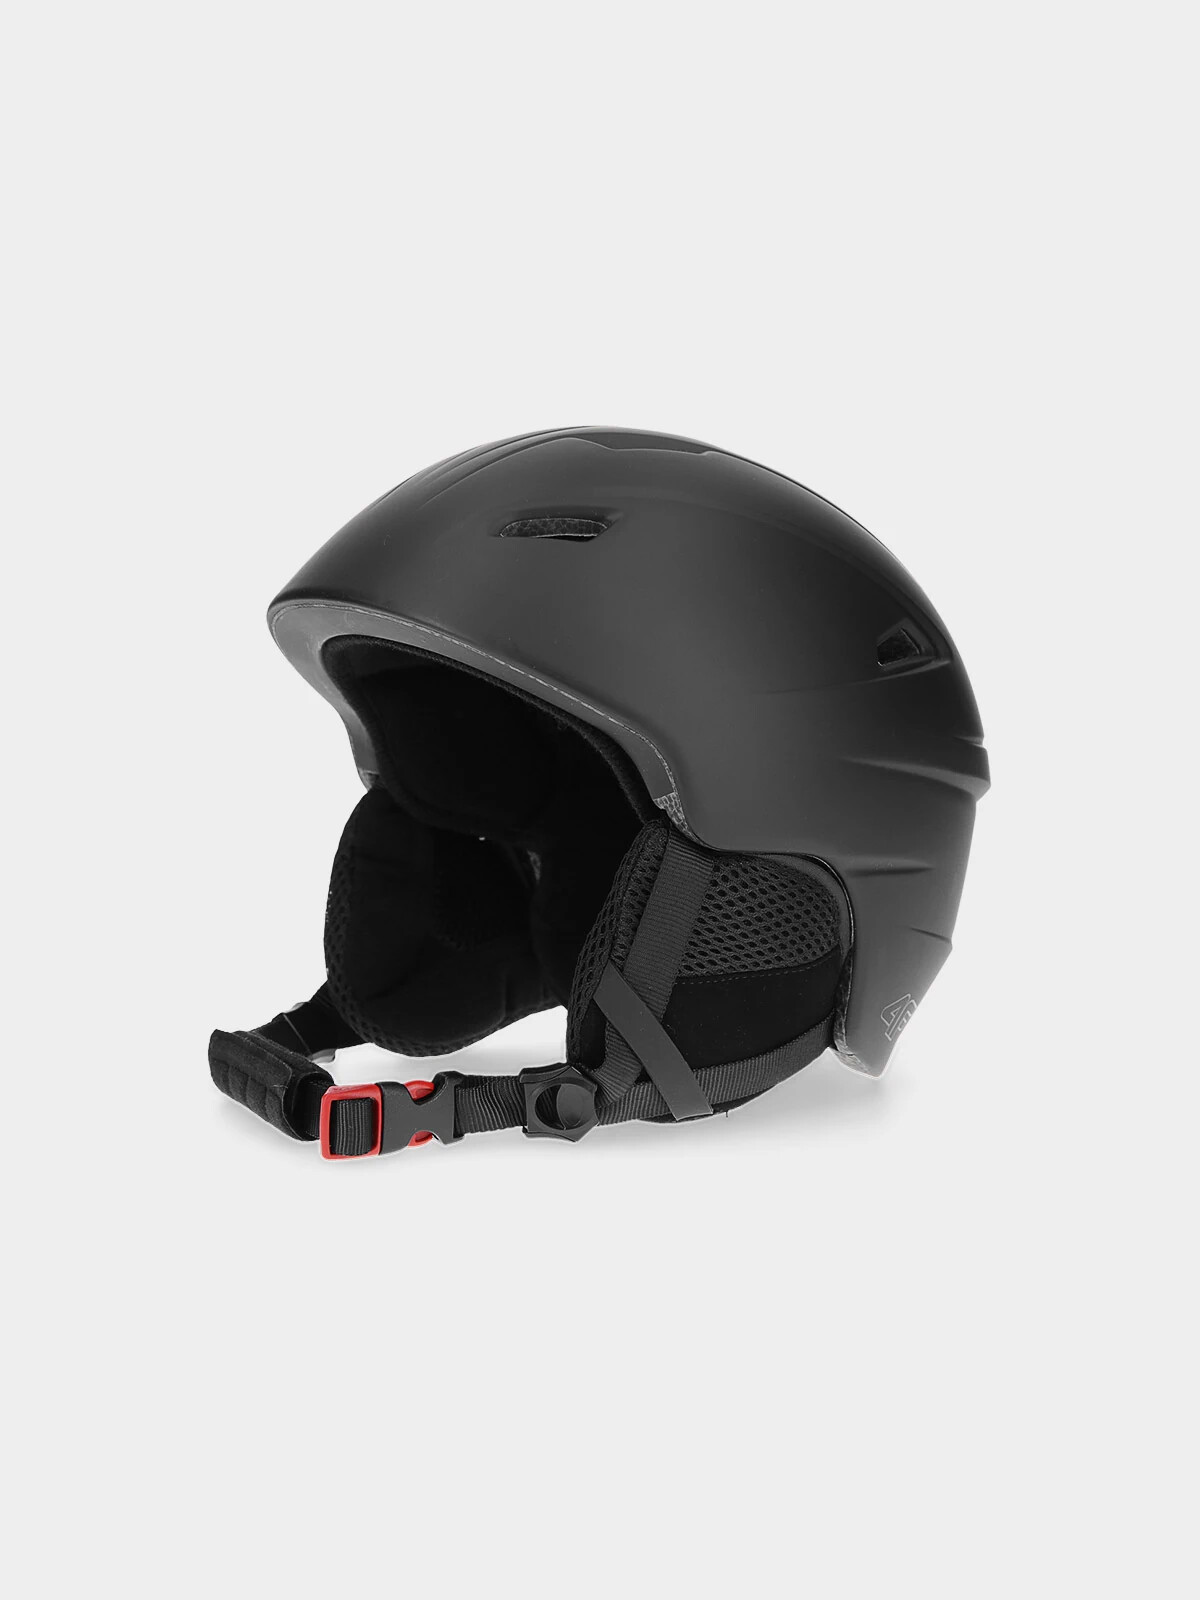 Dámská lyžařská helma 4FWAW23AHELF033-20S černá - 4F S/M (52-56 cm)